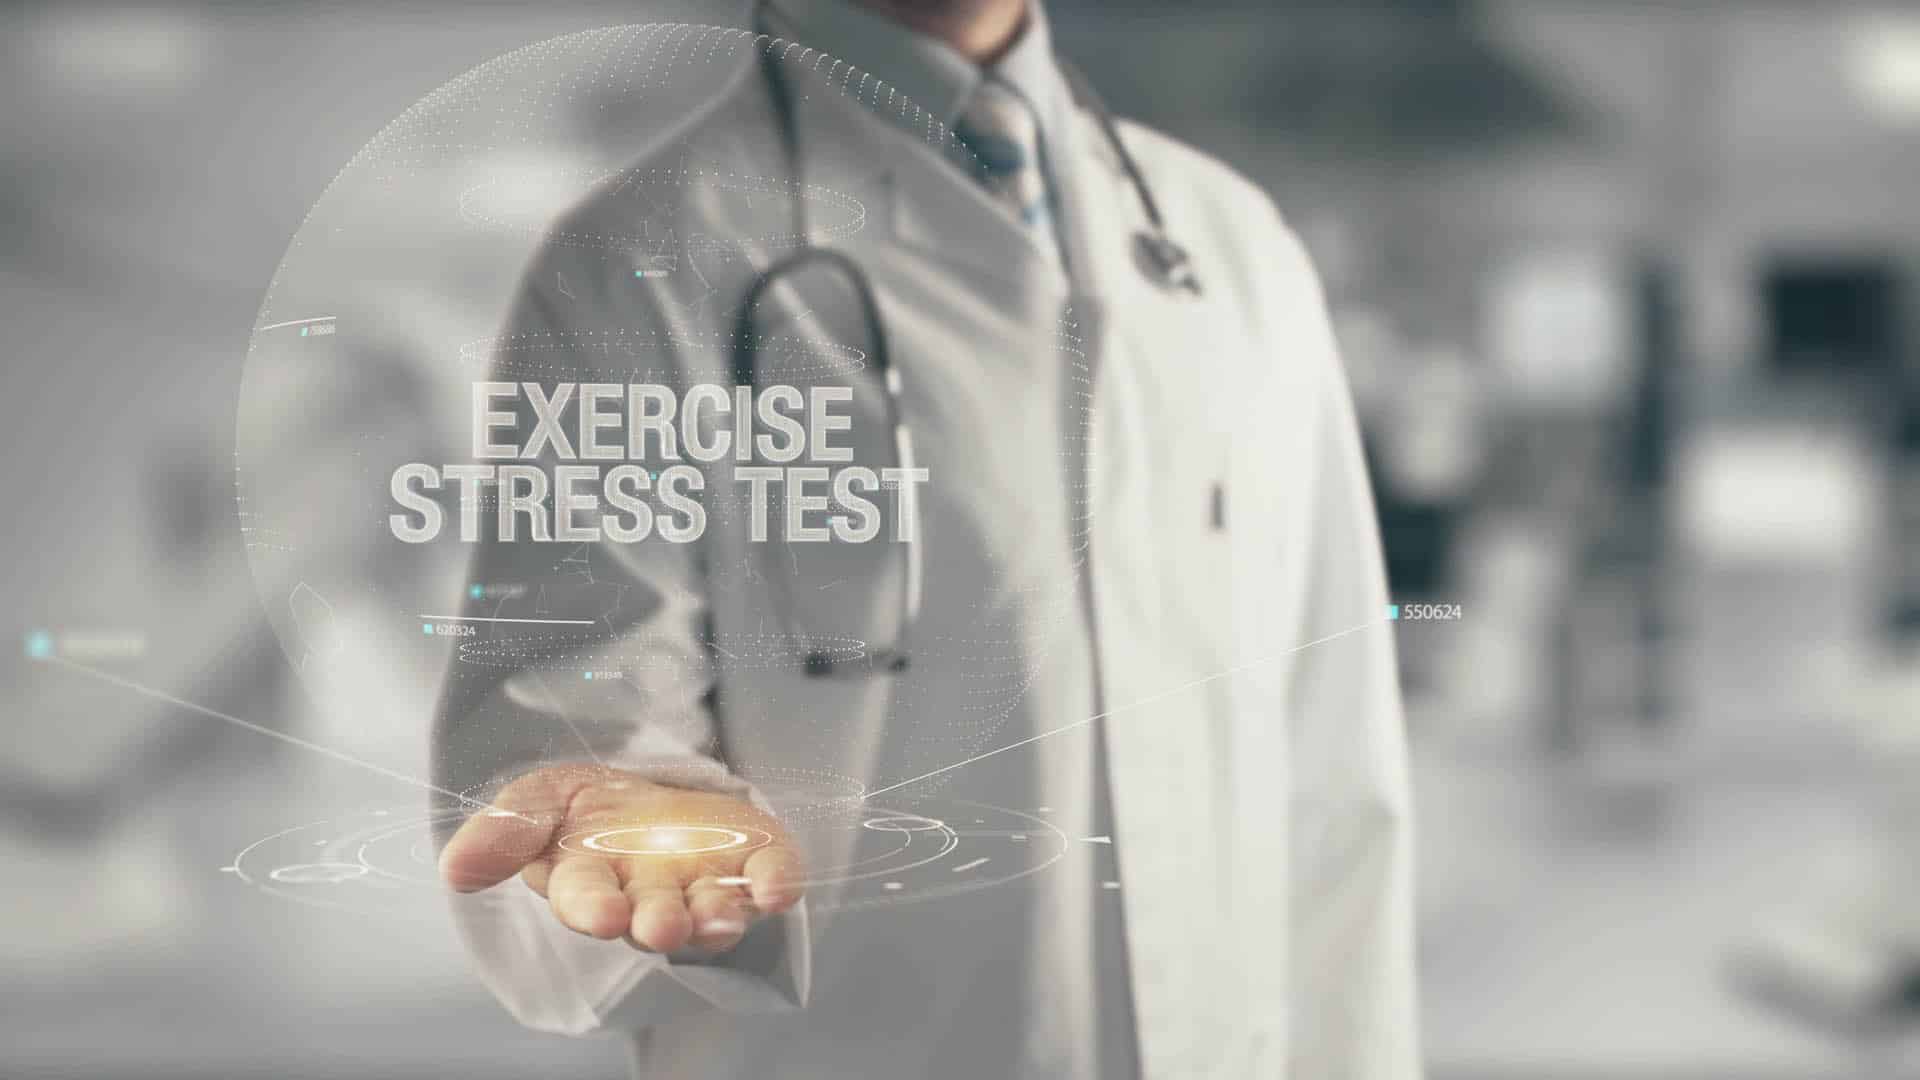 Excercise stress test